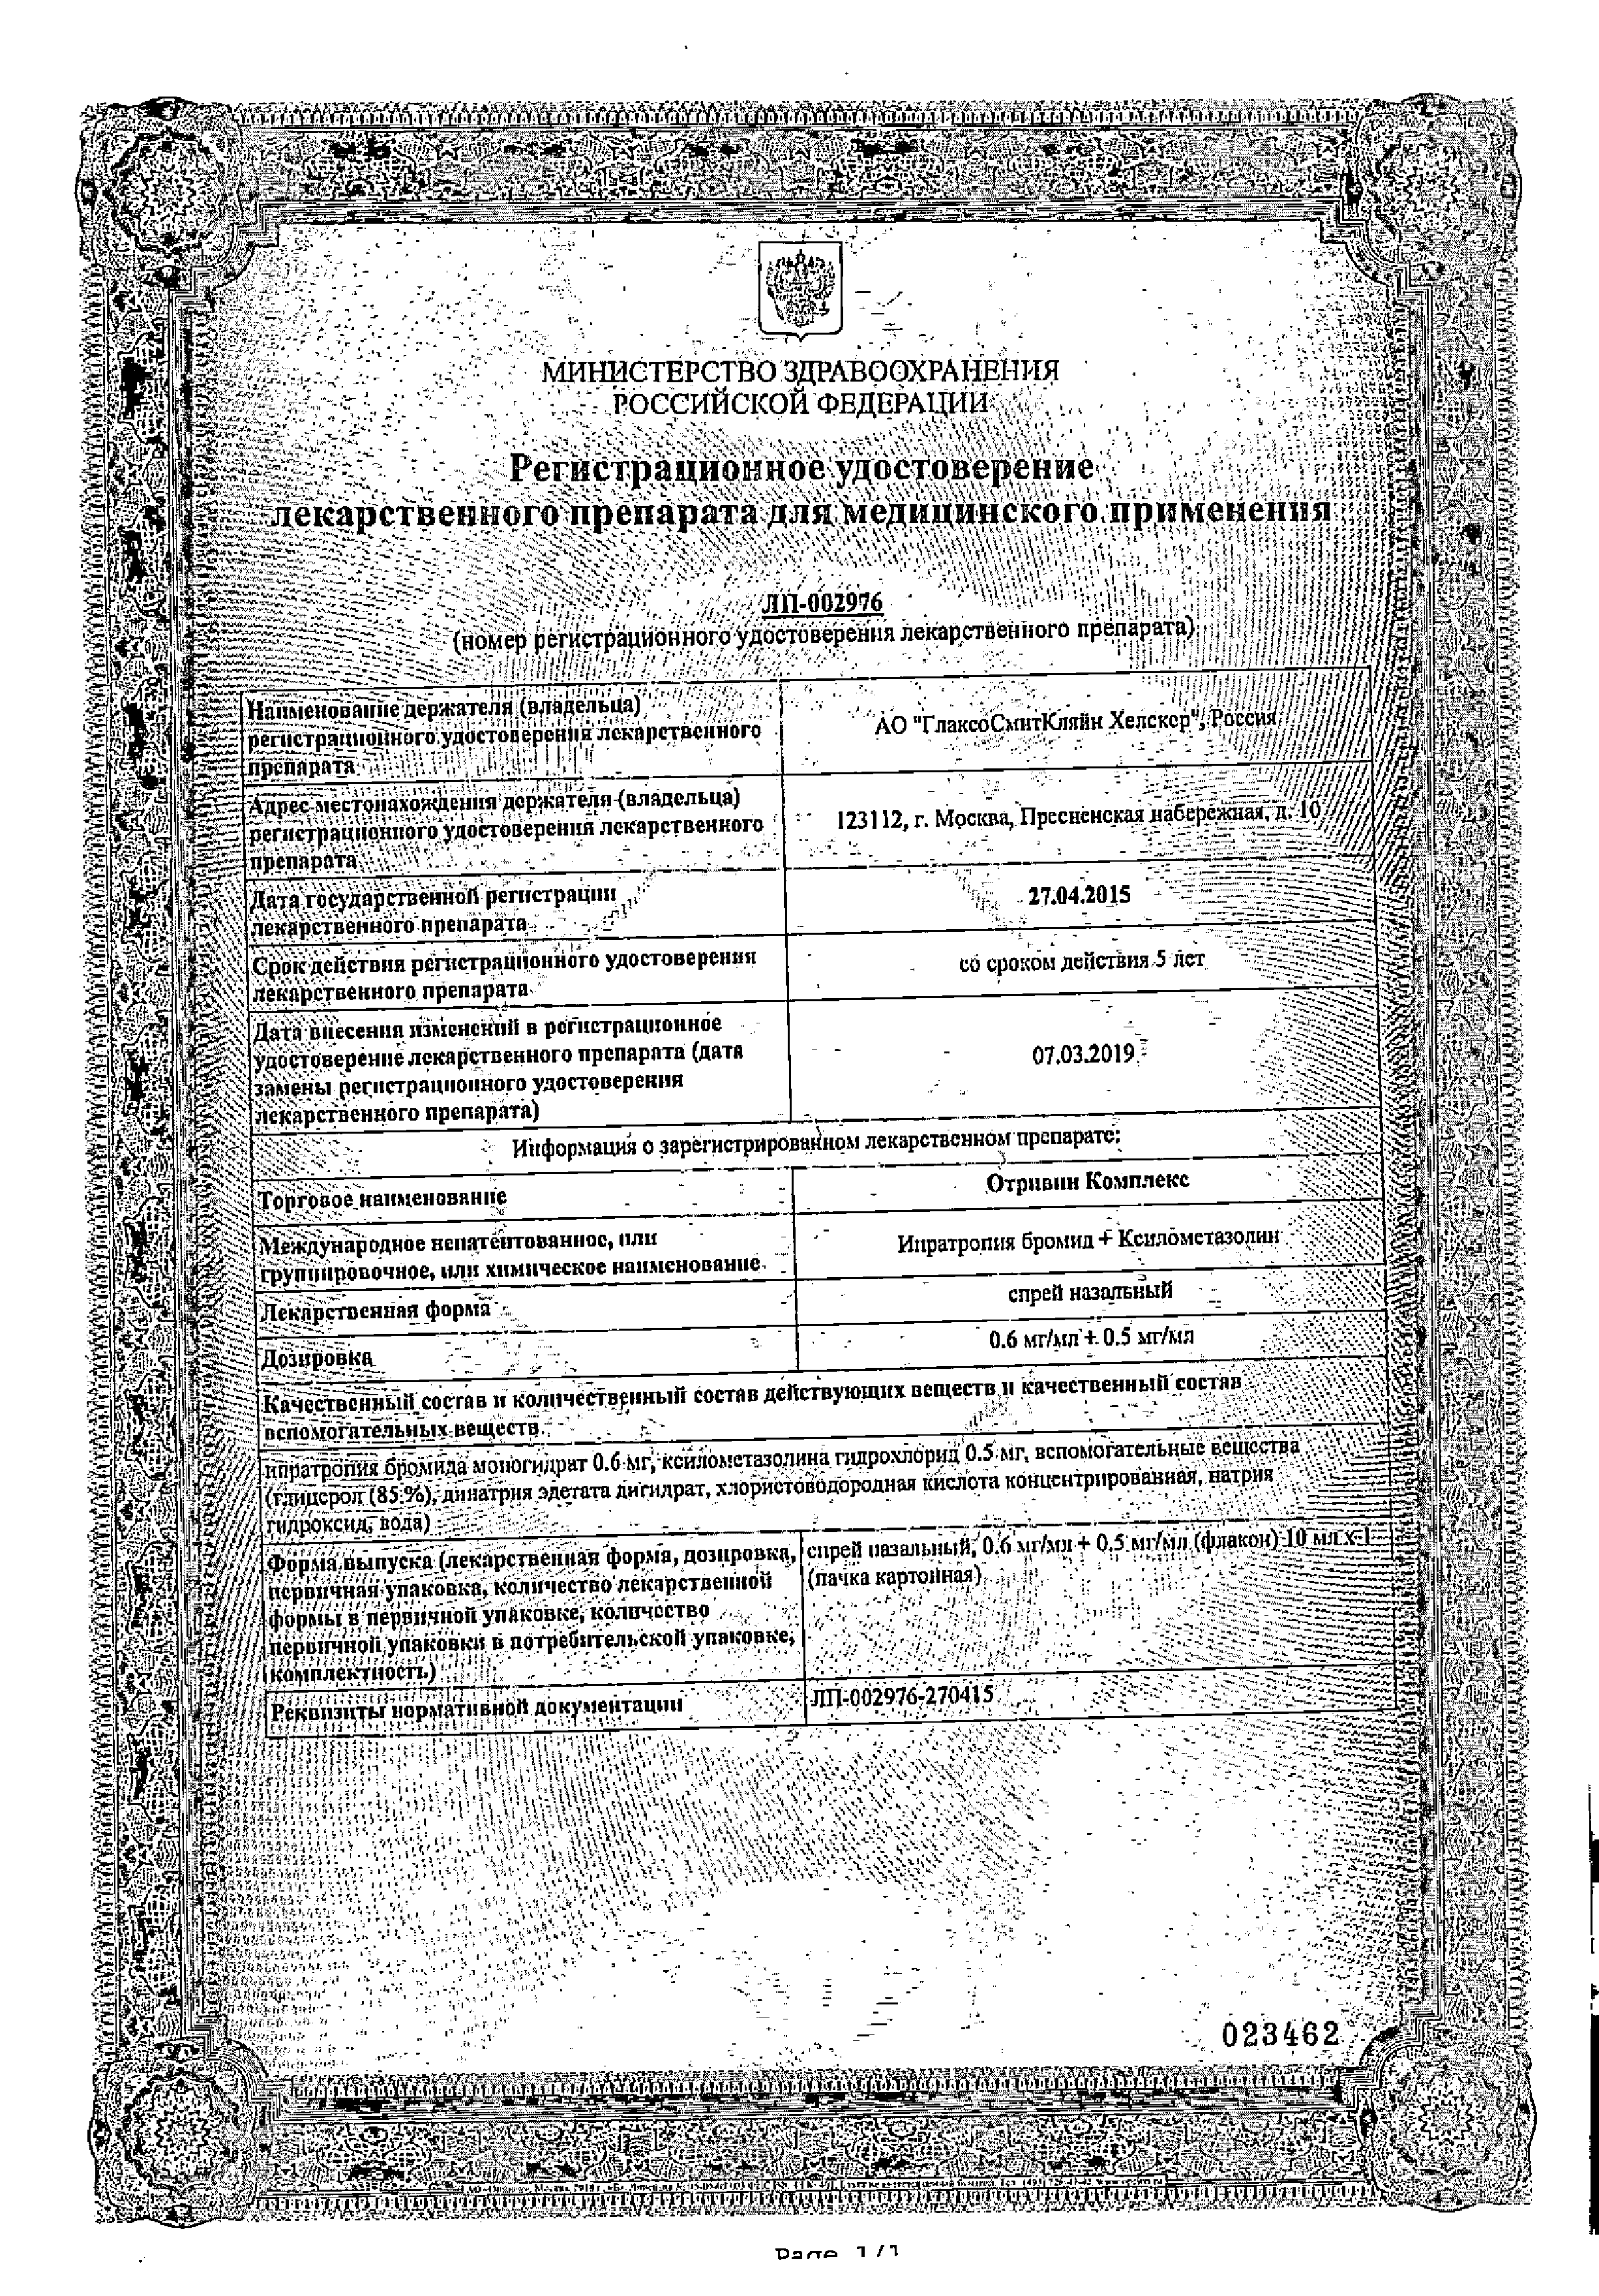 Отривин Комплекс сертификат